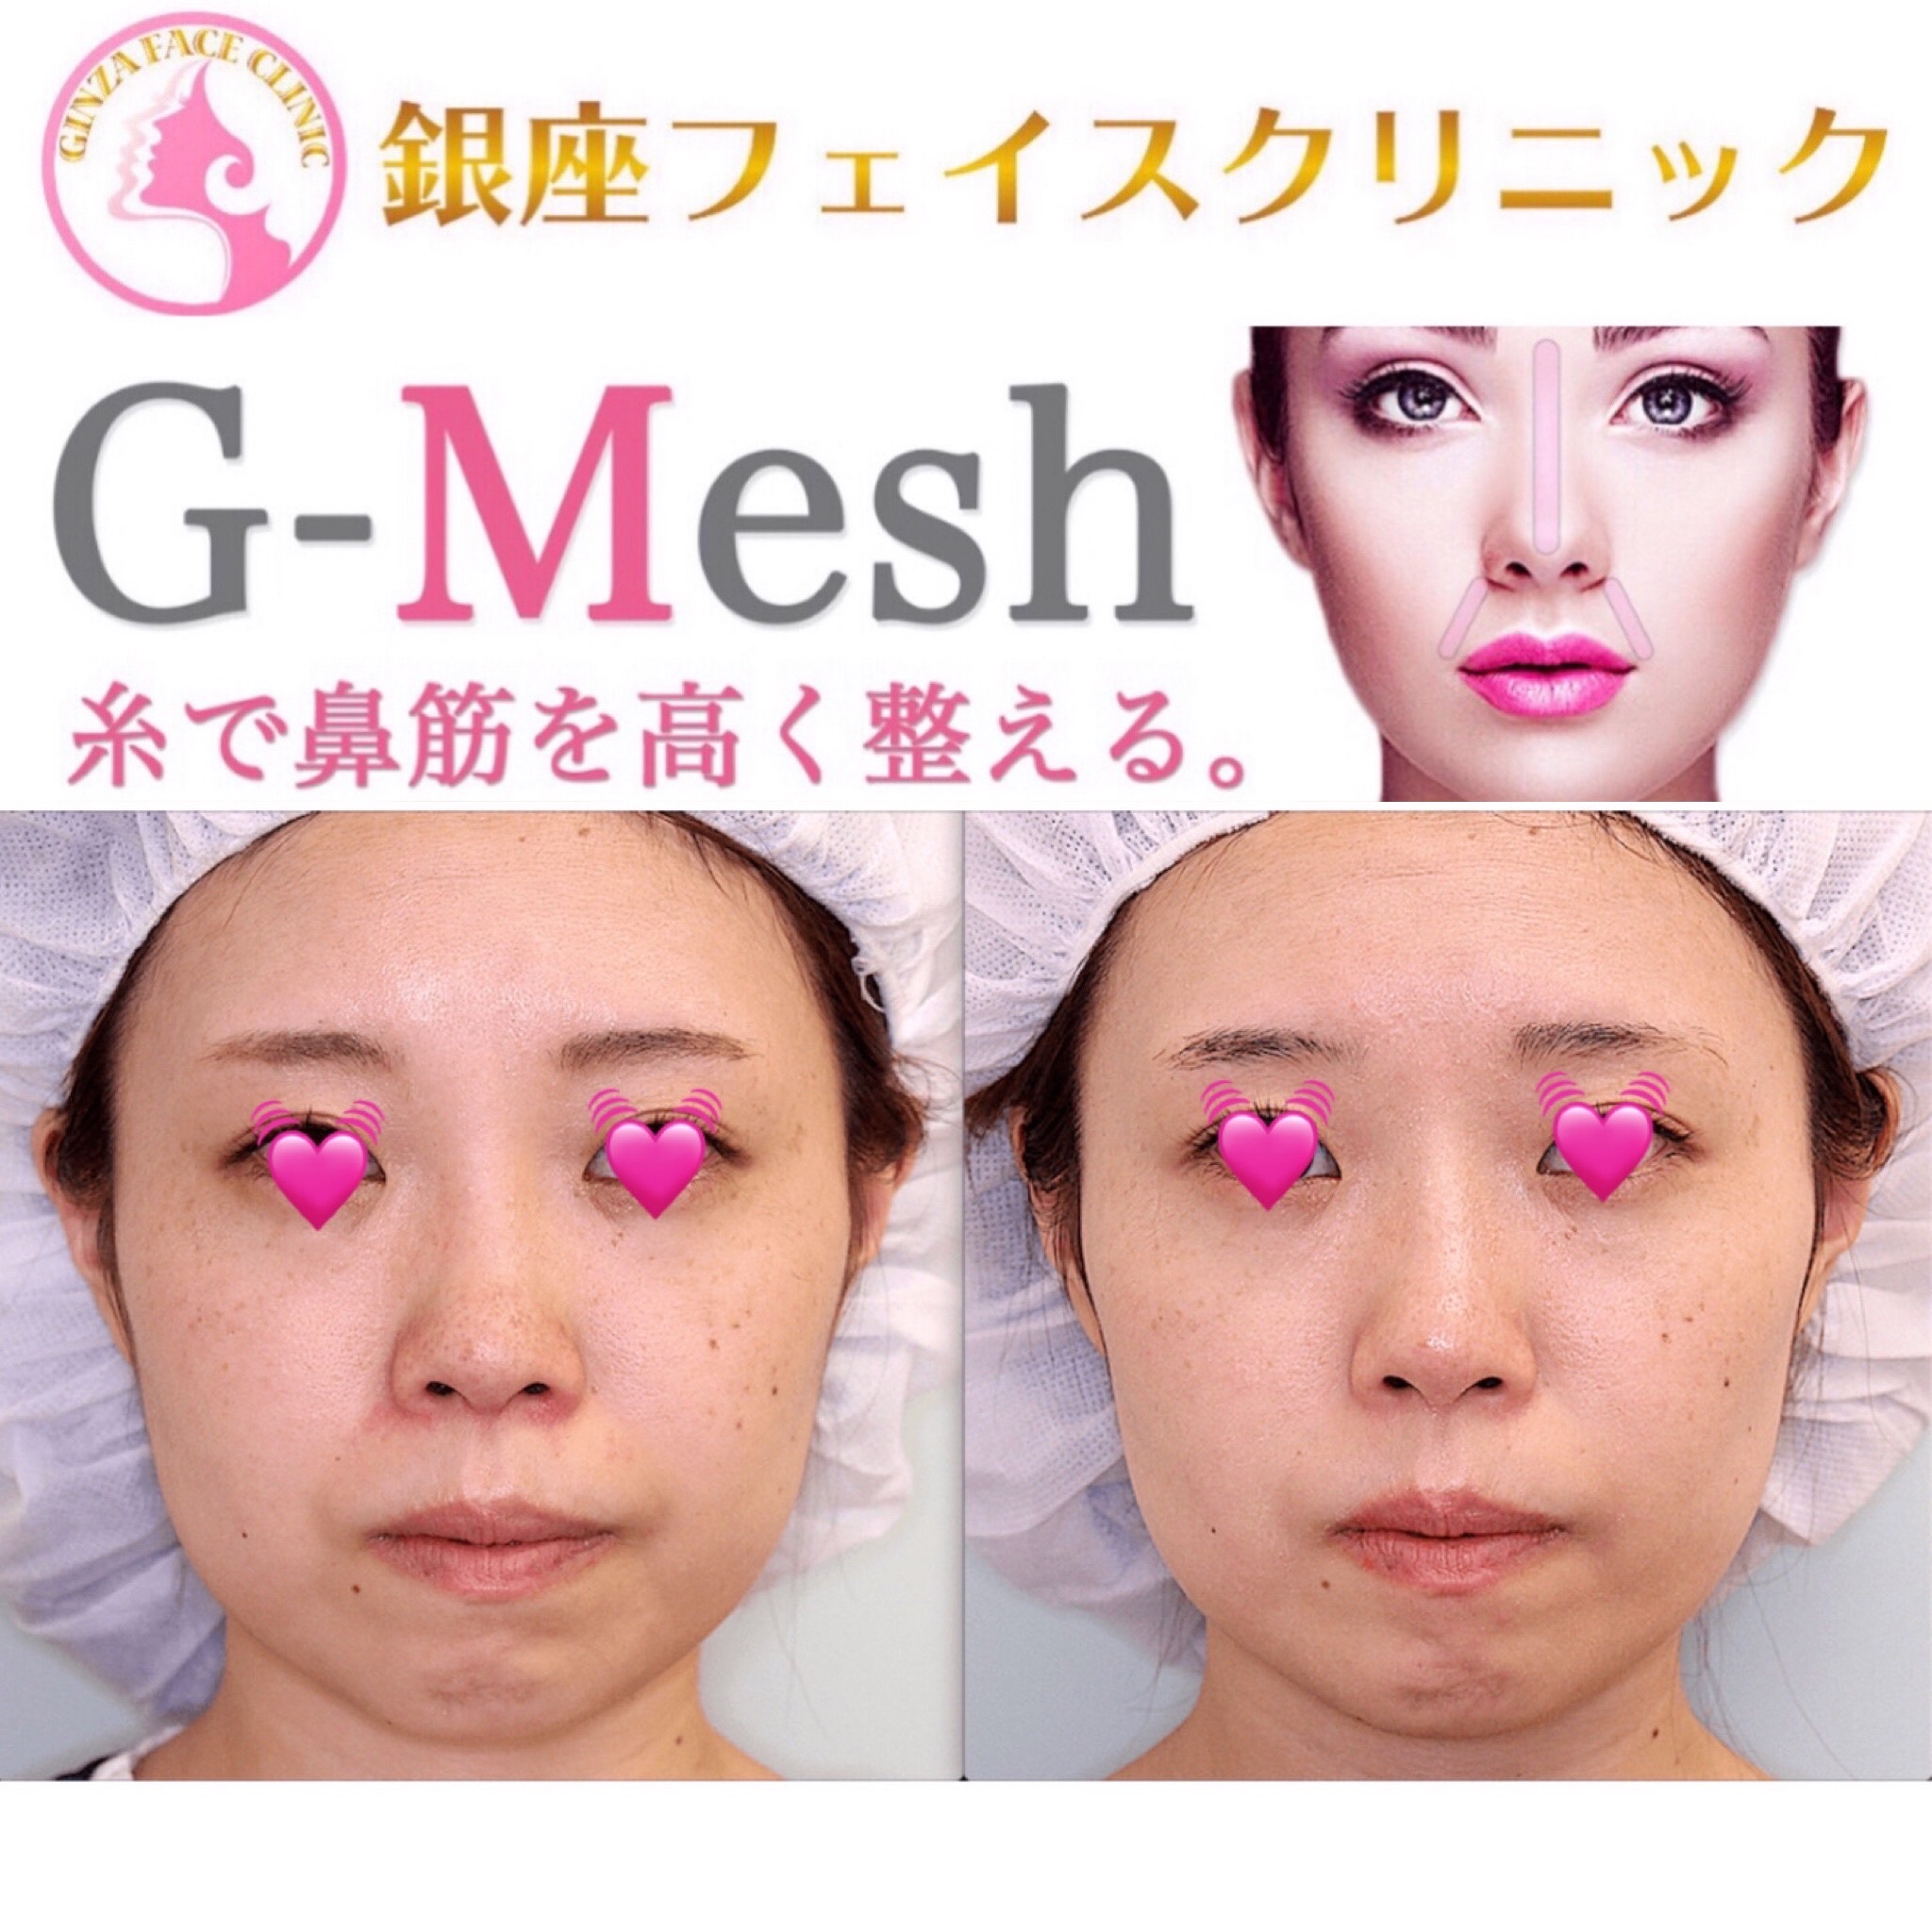 Gメッシュ（鼻）の症例写真 Before After